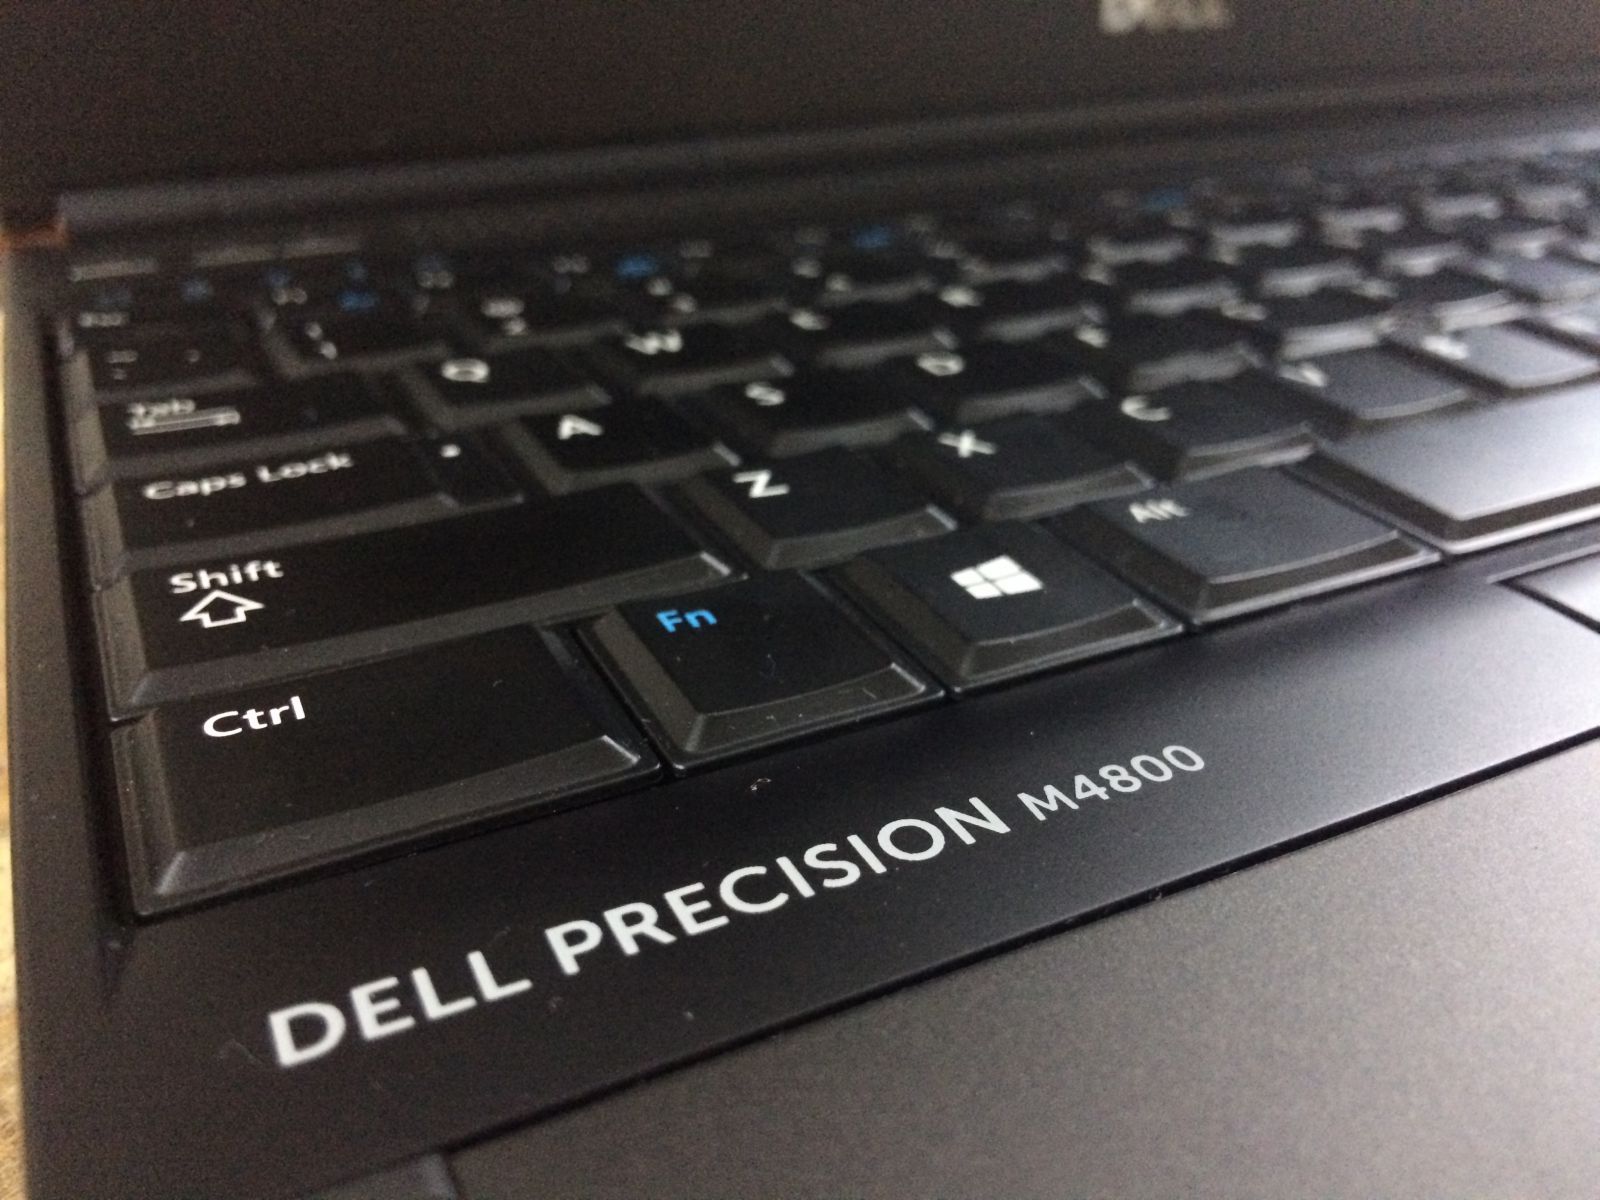 Dell Precision M4800 (Core I7, Ram 8GB, SSD 200GB, VGA RỜI K100M, Màn hình full HD)